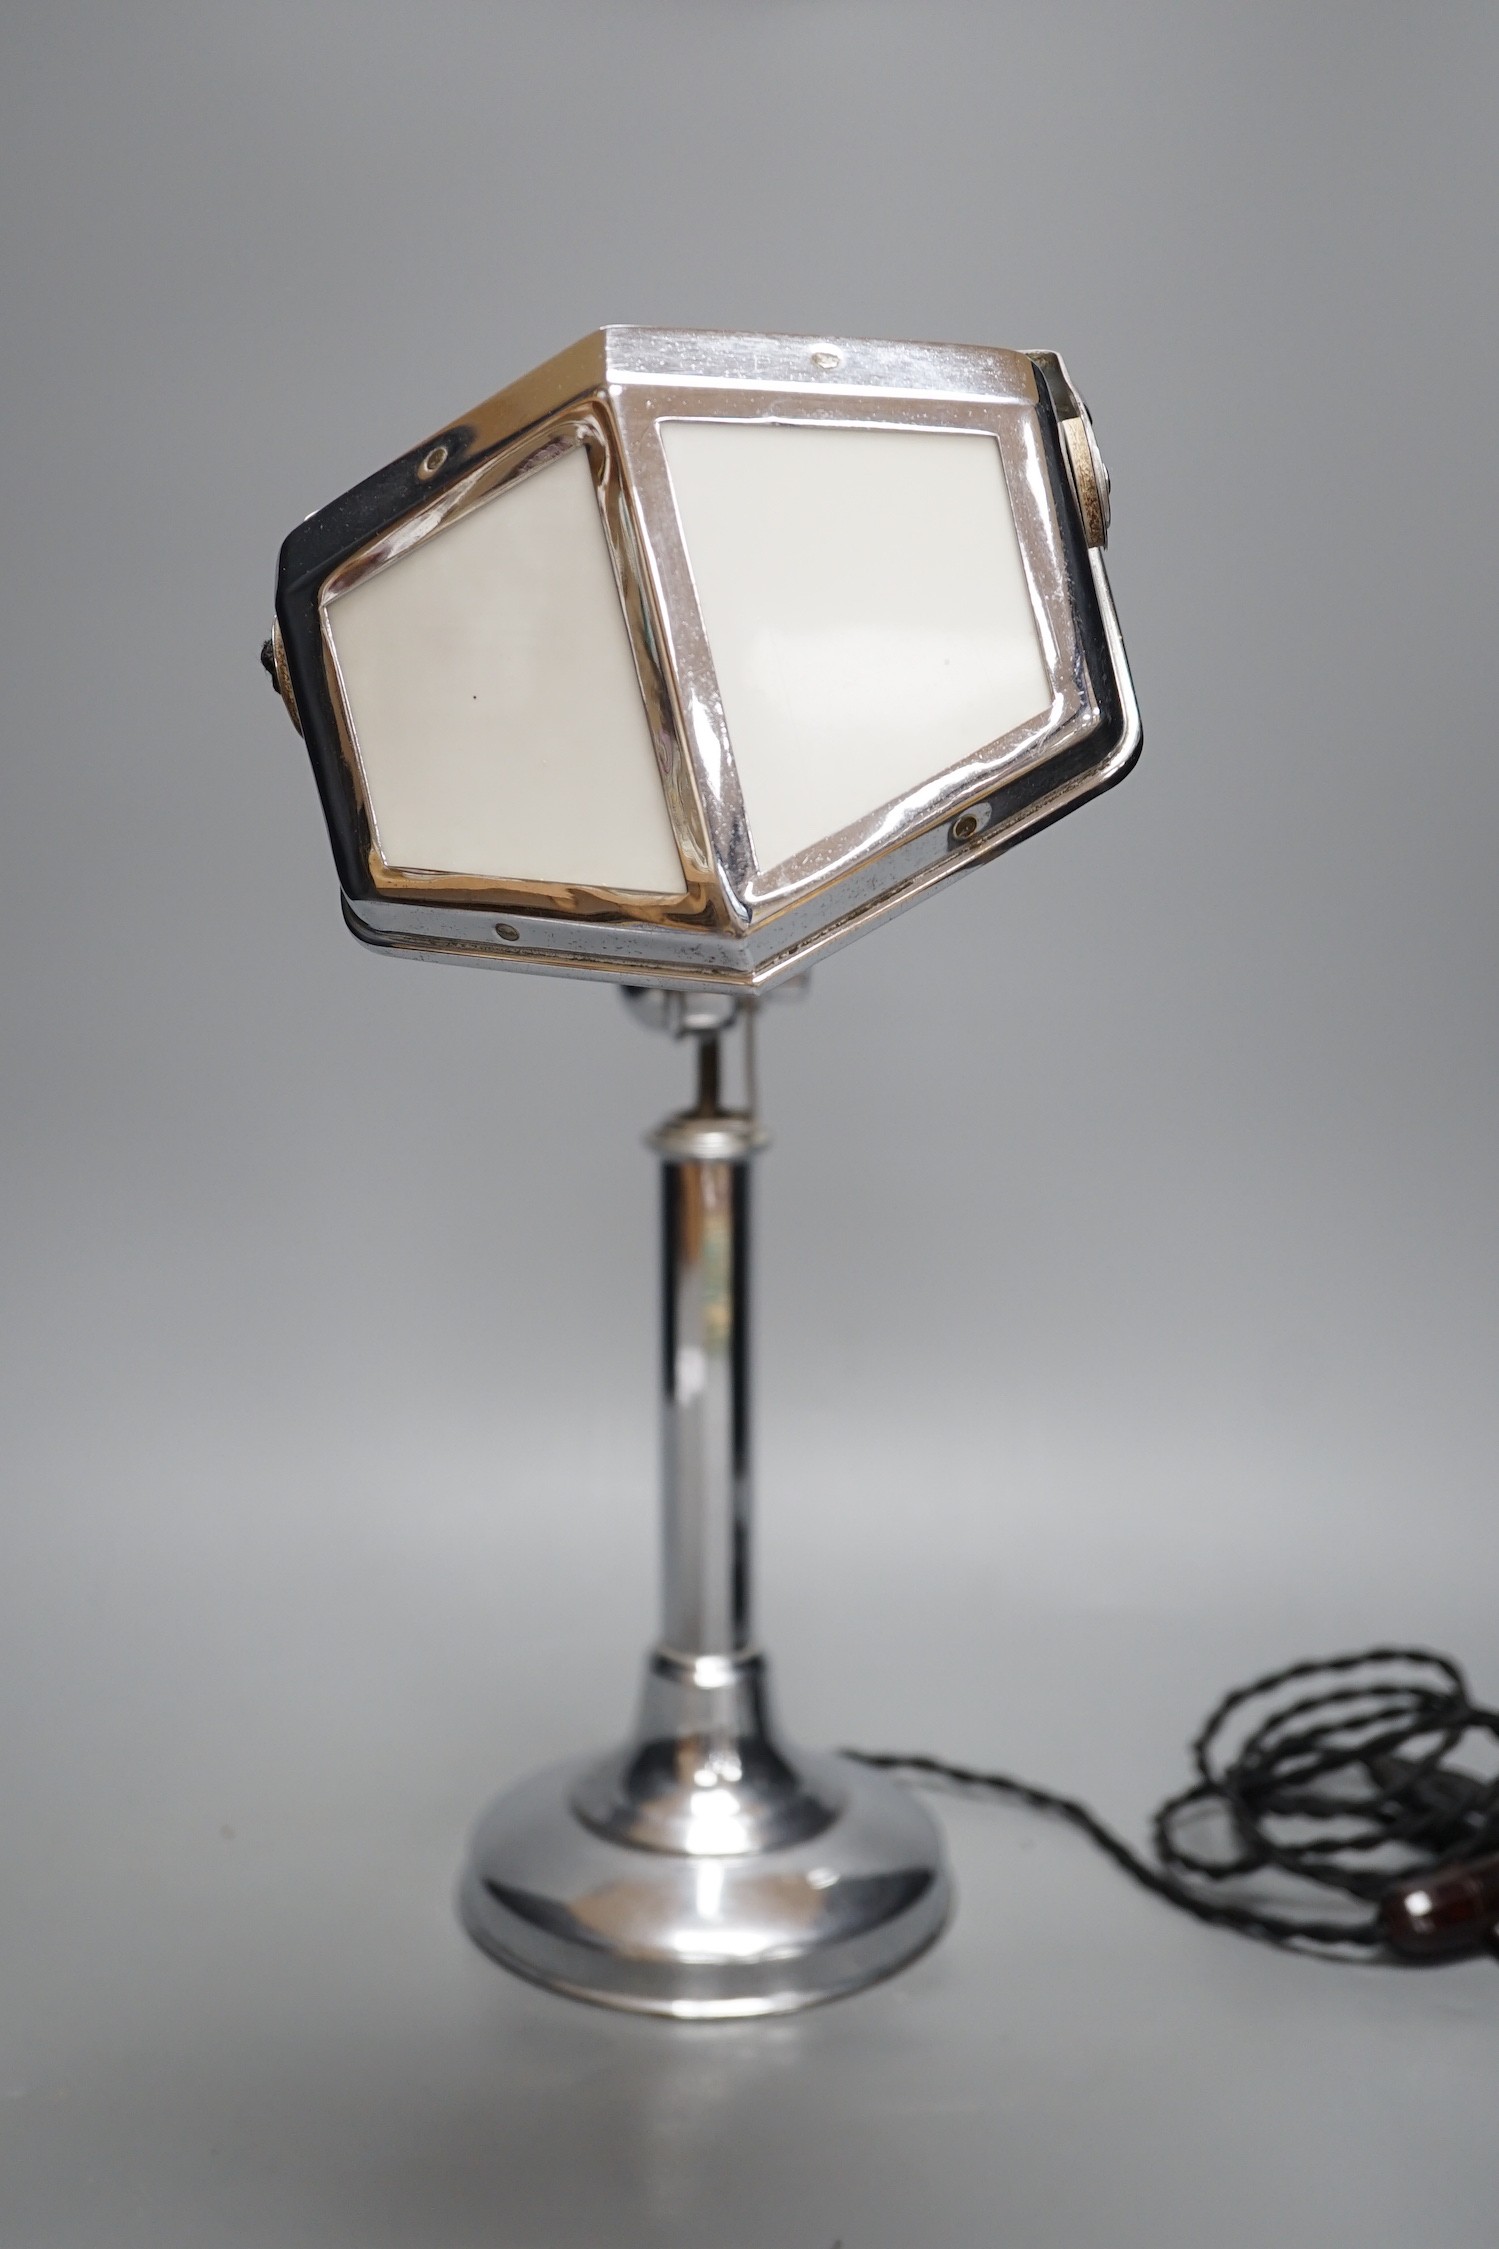 A chrome pirouette adjustable desk lamp